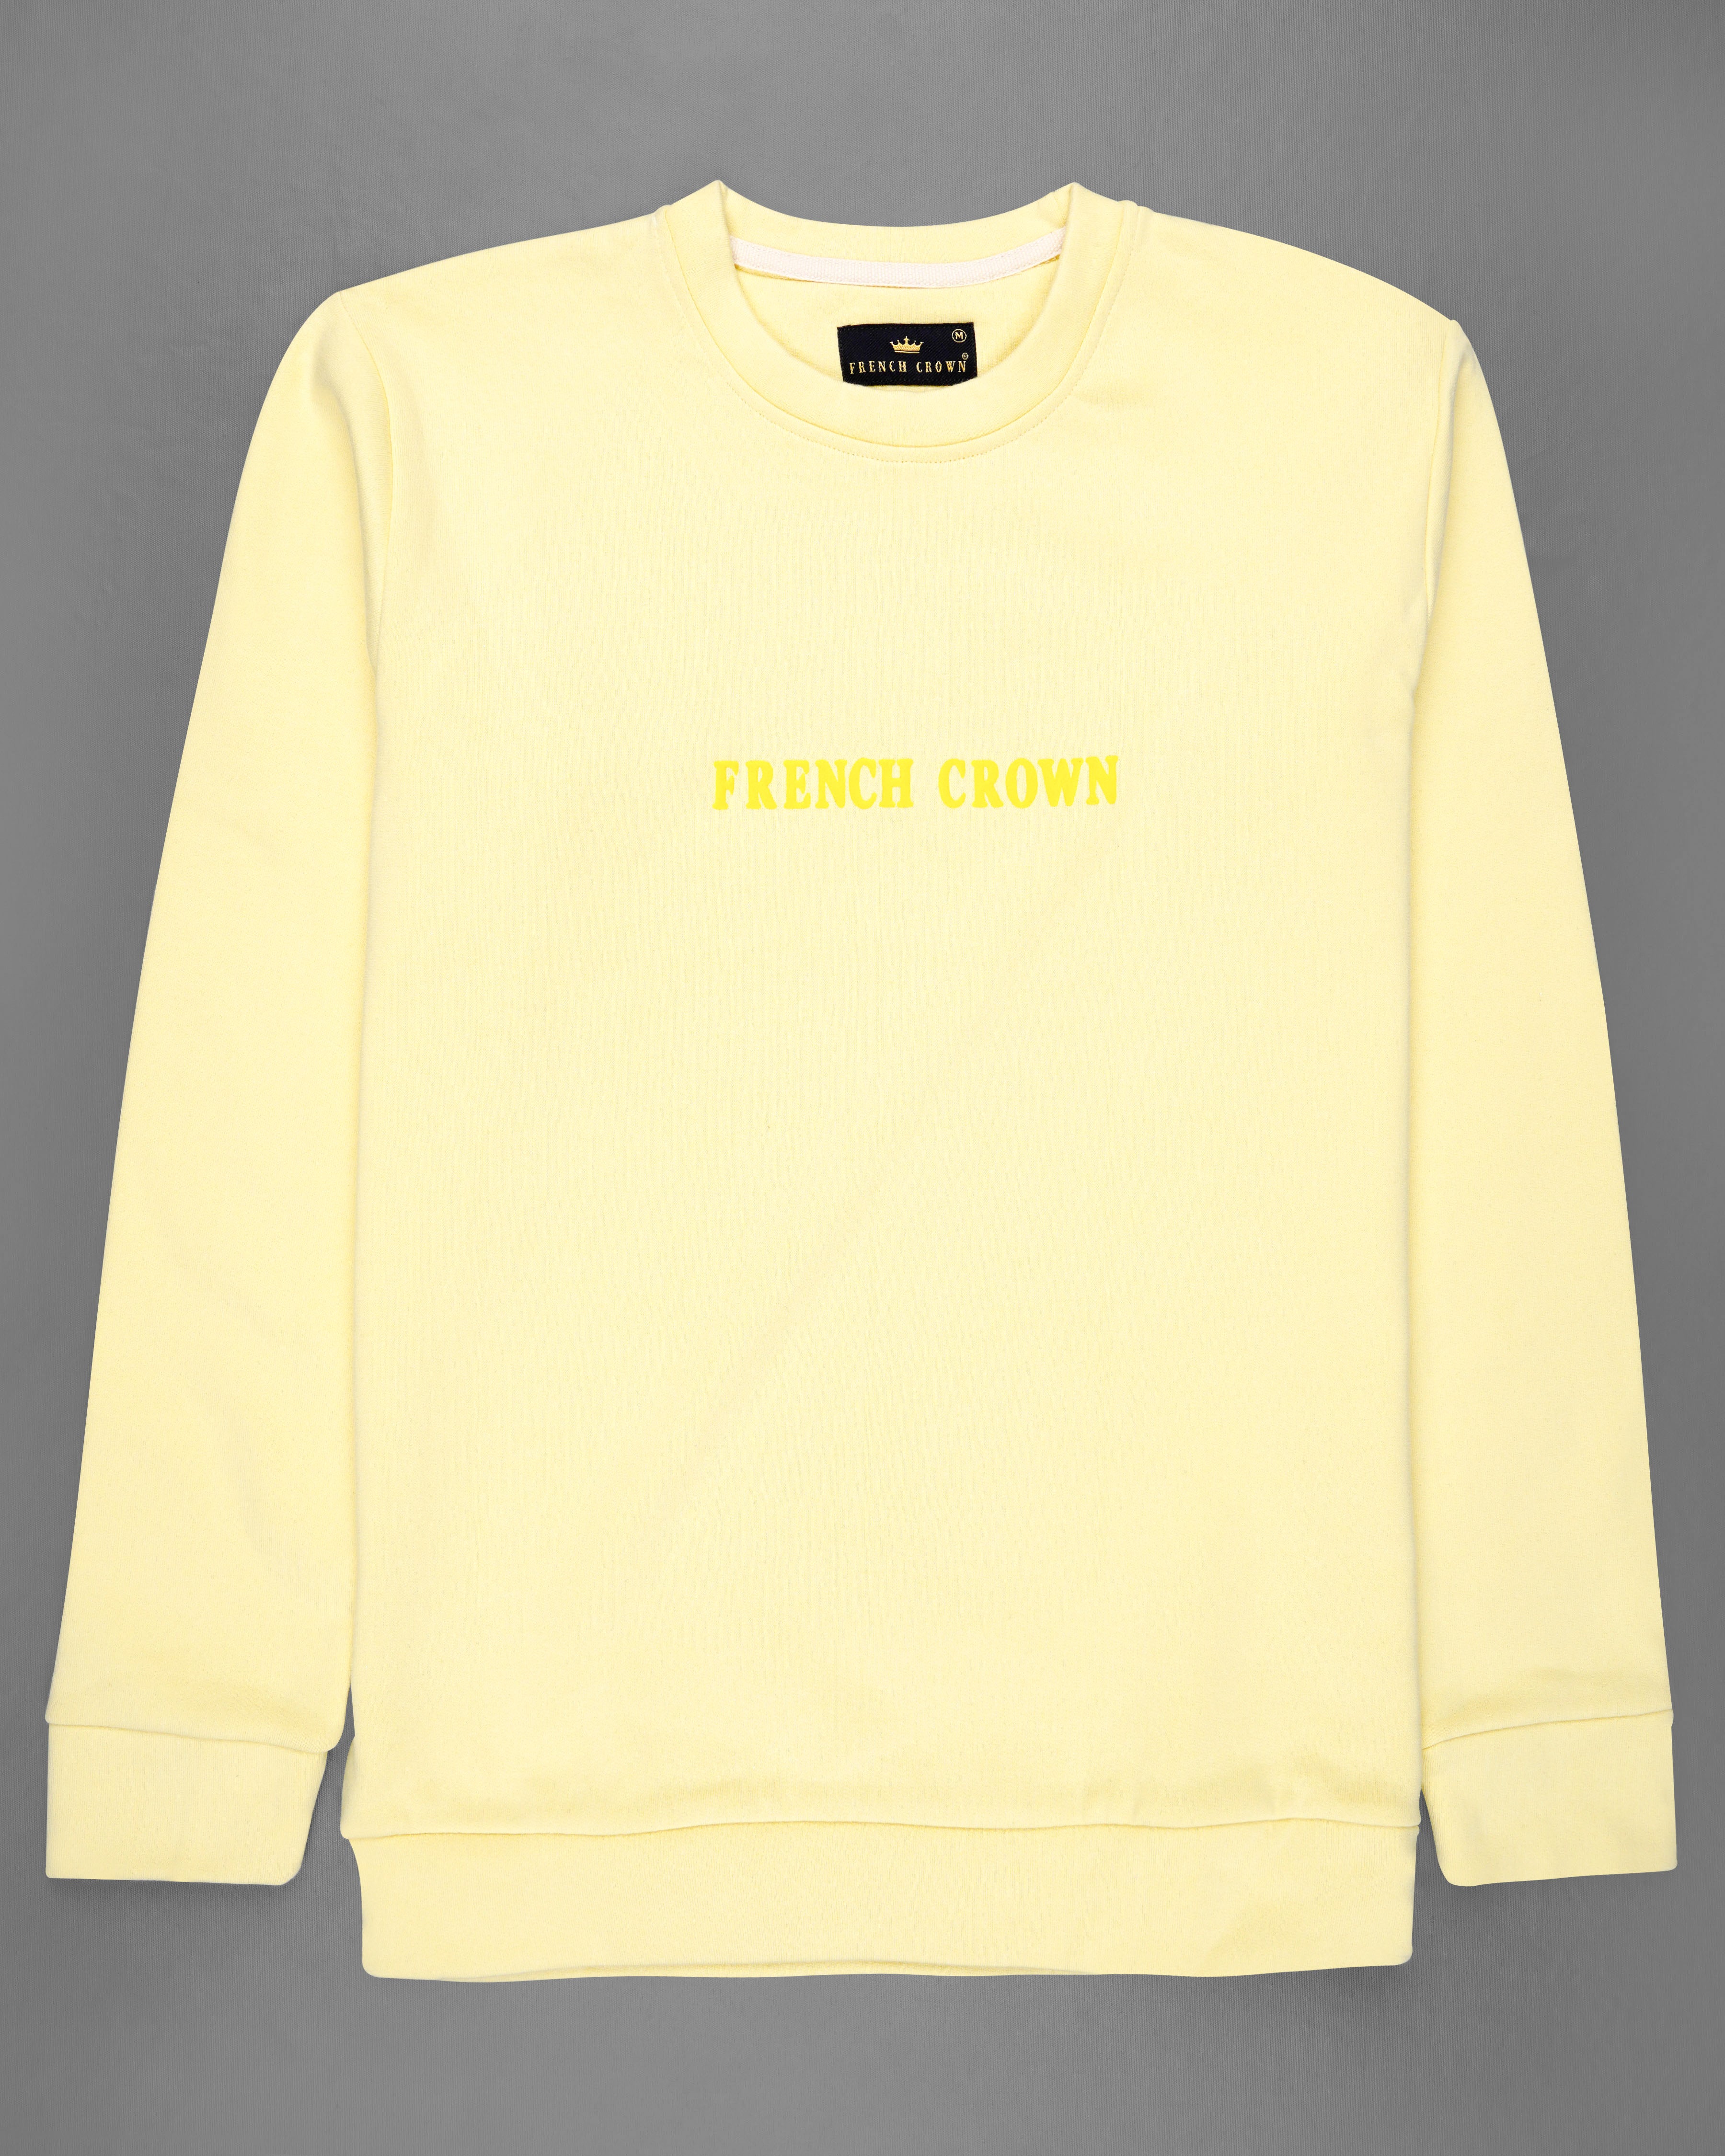 Beeswax Yellow Premium Cotton Sweatshirt with Shorts Combo TS617-SR172-S, TS617-SR172-M, TS617-SR172-L, TS617-SR172-XL, TS617-SR172-XXL